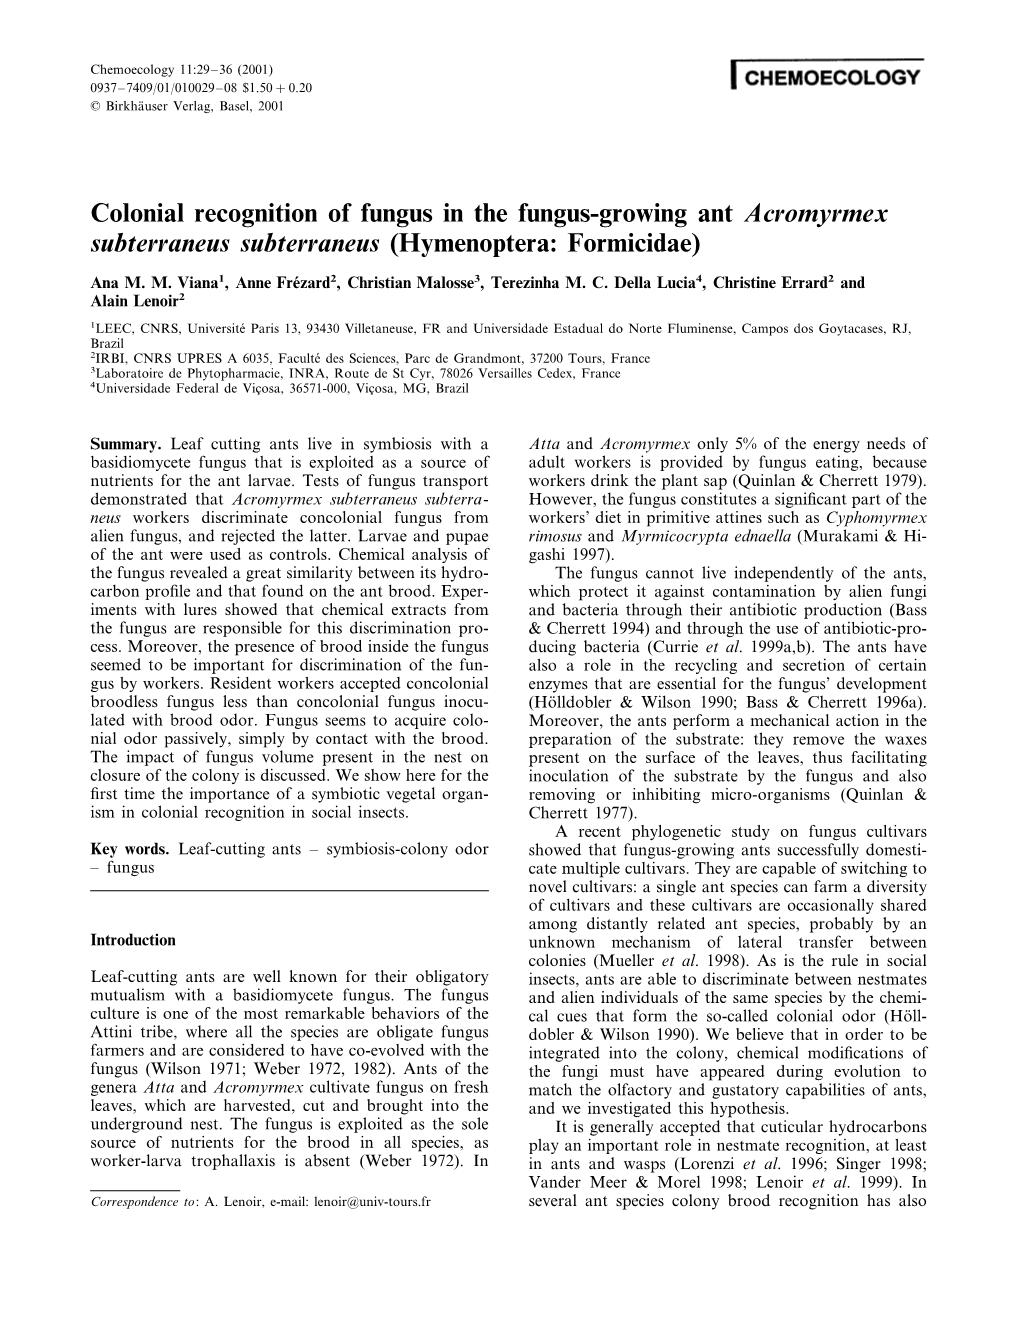 Colonial Recognition of Fungus in the Fungus-Growing Ant Acromyrmex Subterraneus Subterraneus (Hymenoptera: Formicidae)